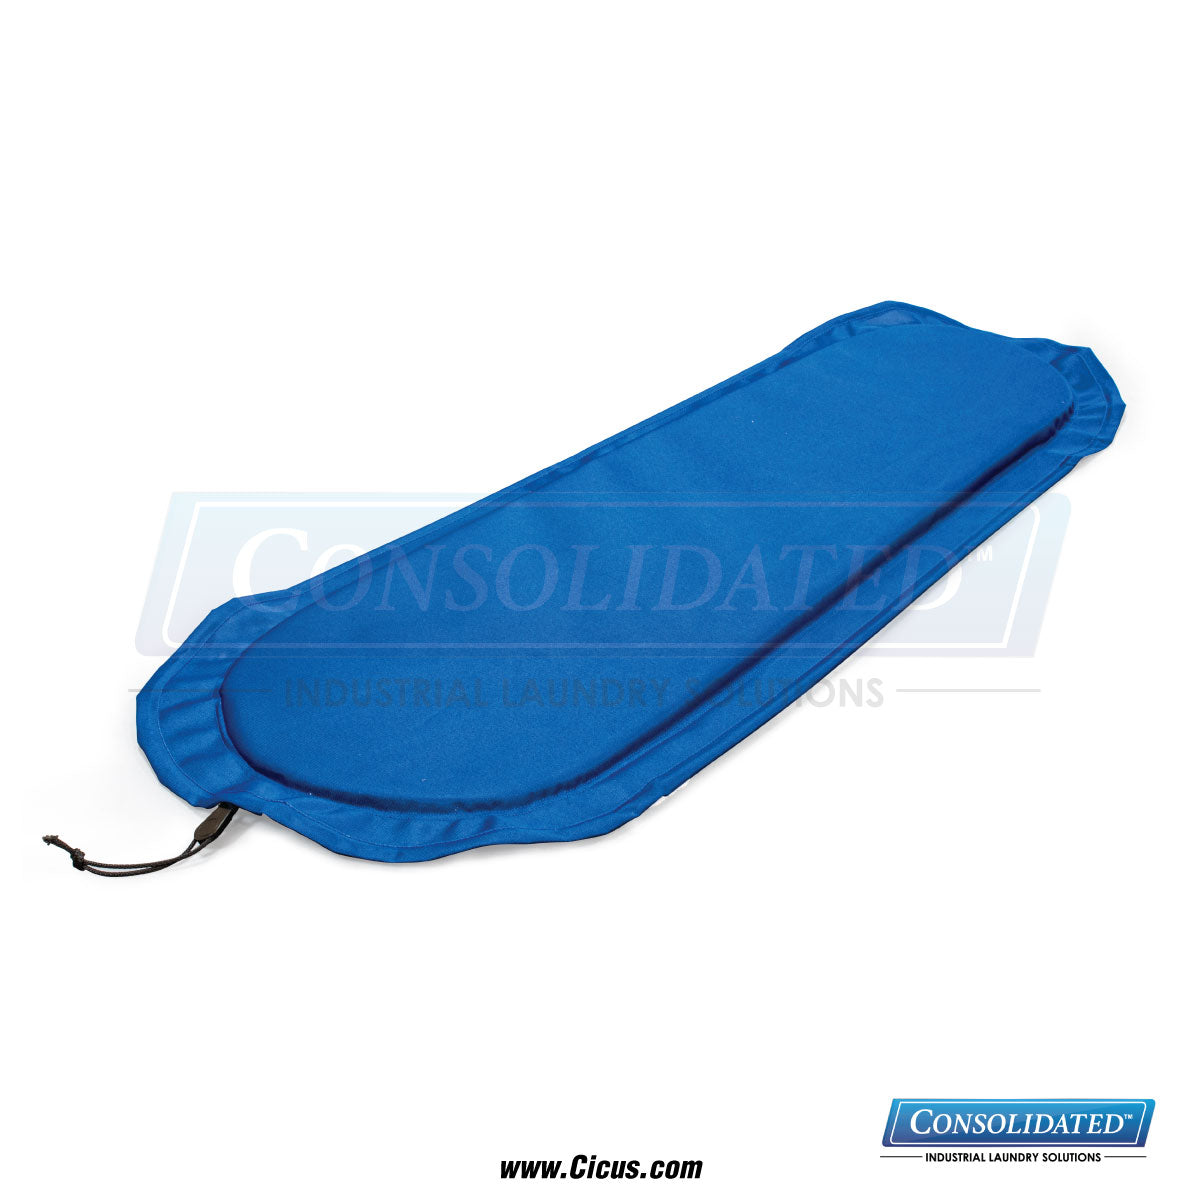 Coronet 42" Blue Utility Press Pad Cover [FS-10]